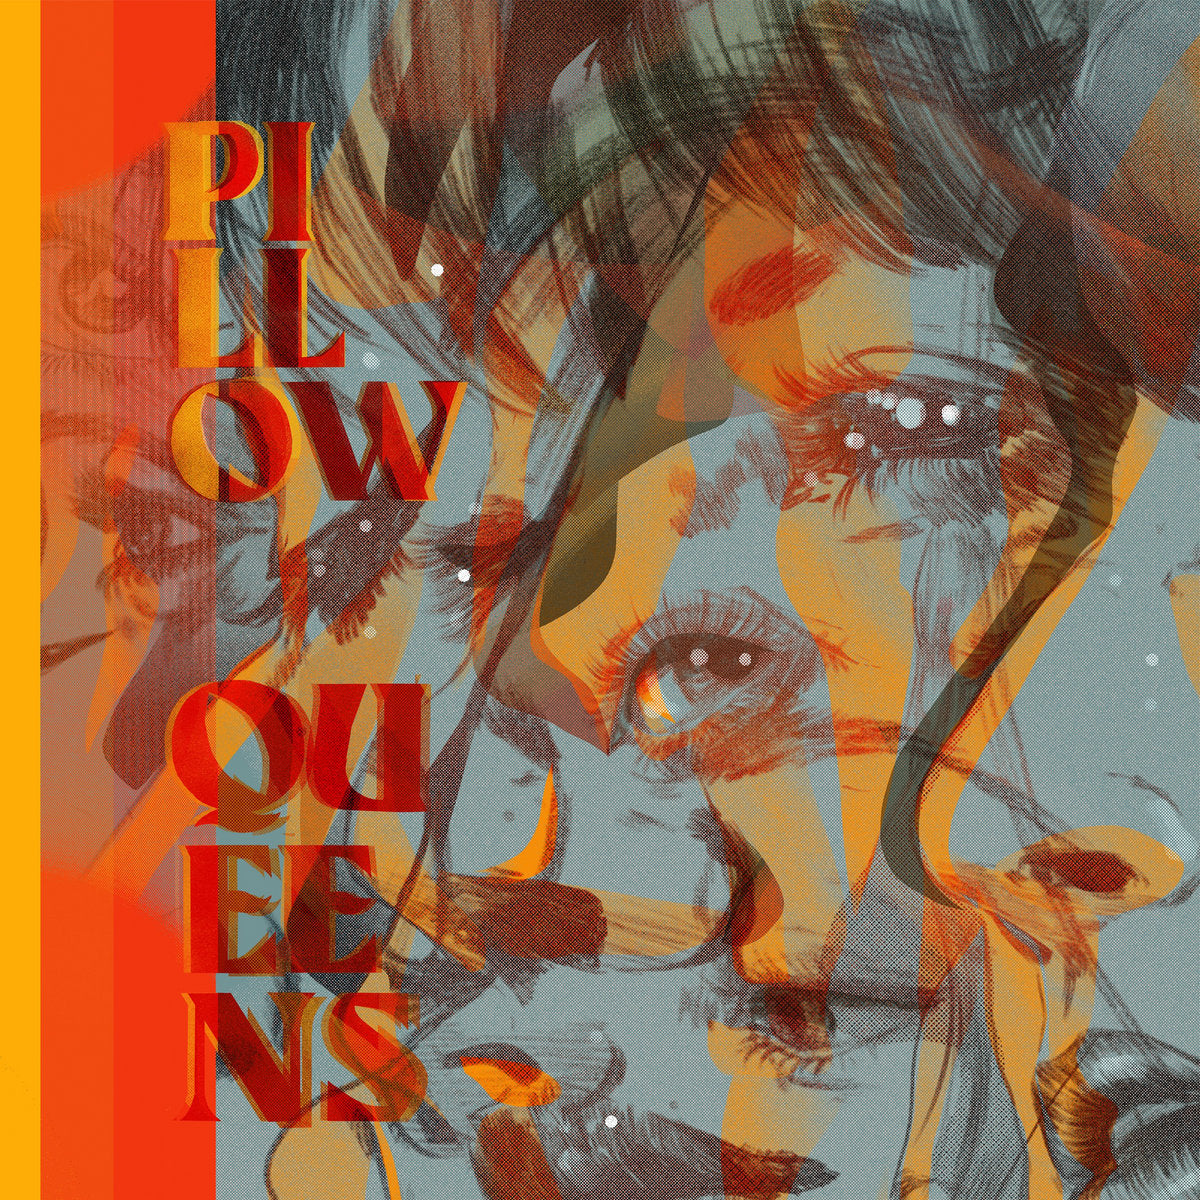 Pillow Queens: Leave The Light On (Vinyl LP)